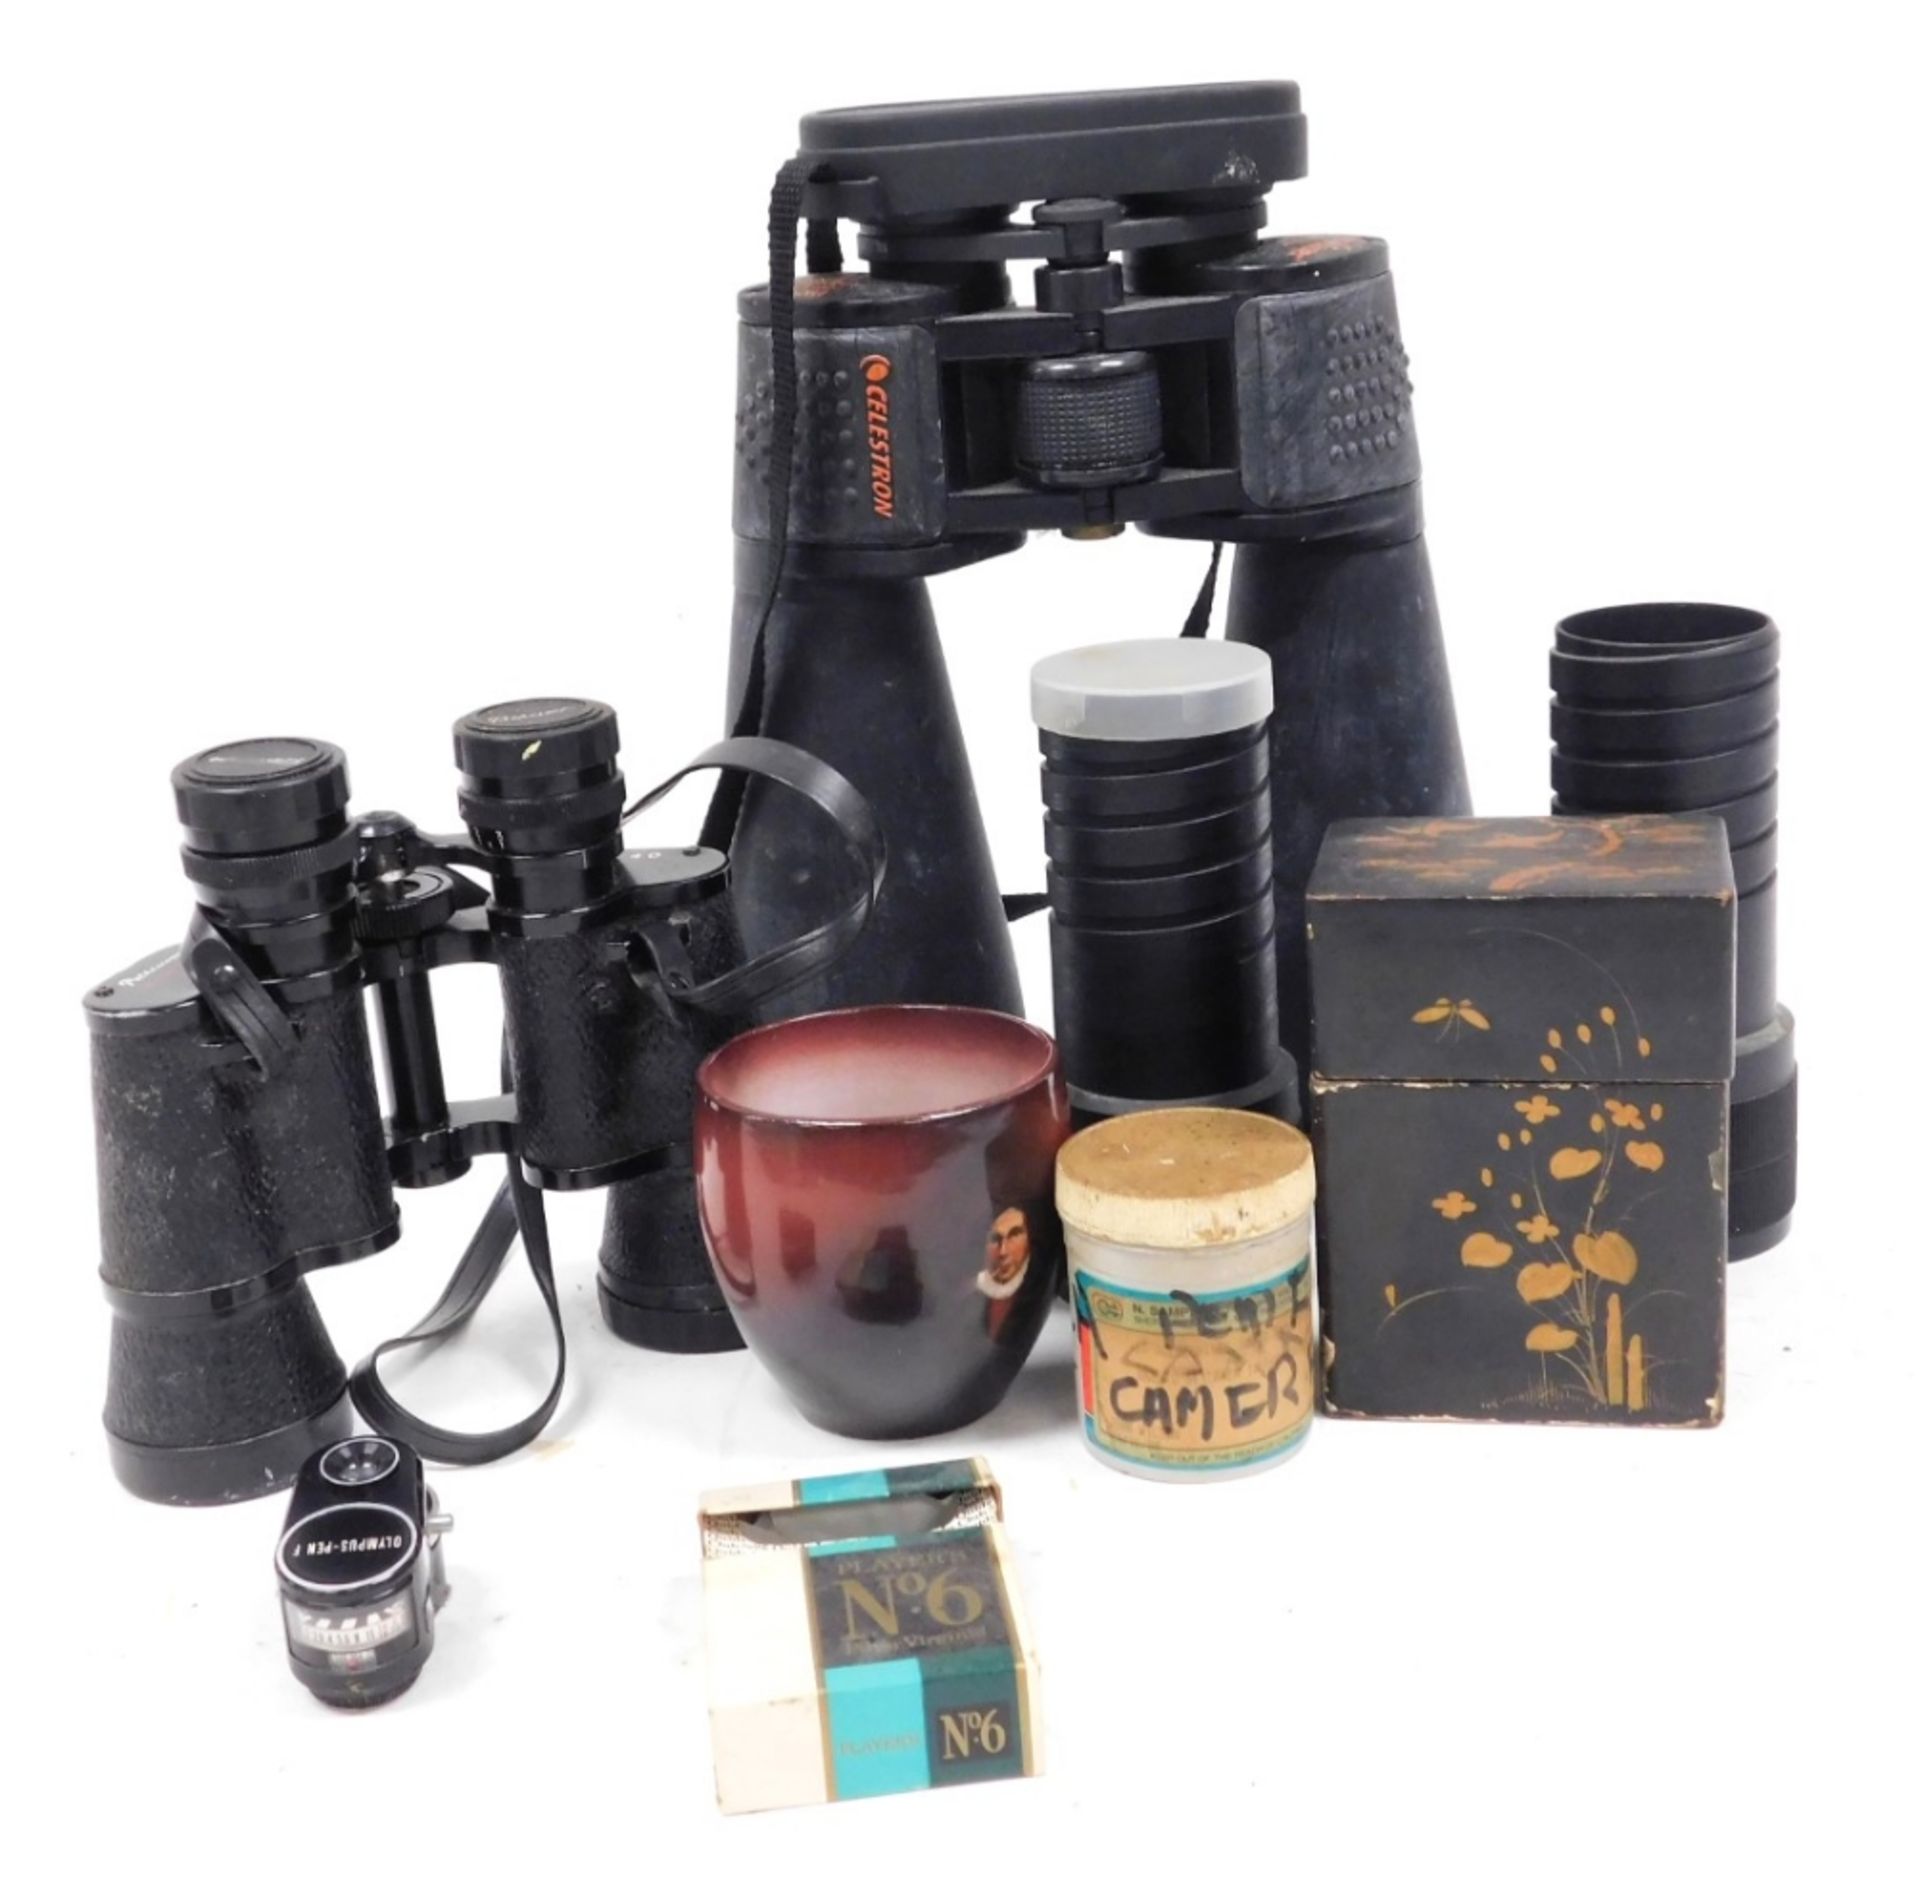 A pair of Skymaster 25x70 FOV-2.7 binoculars, pathescope binoculars, Kodak lens, lacquer box contain